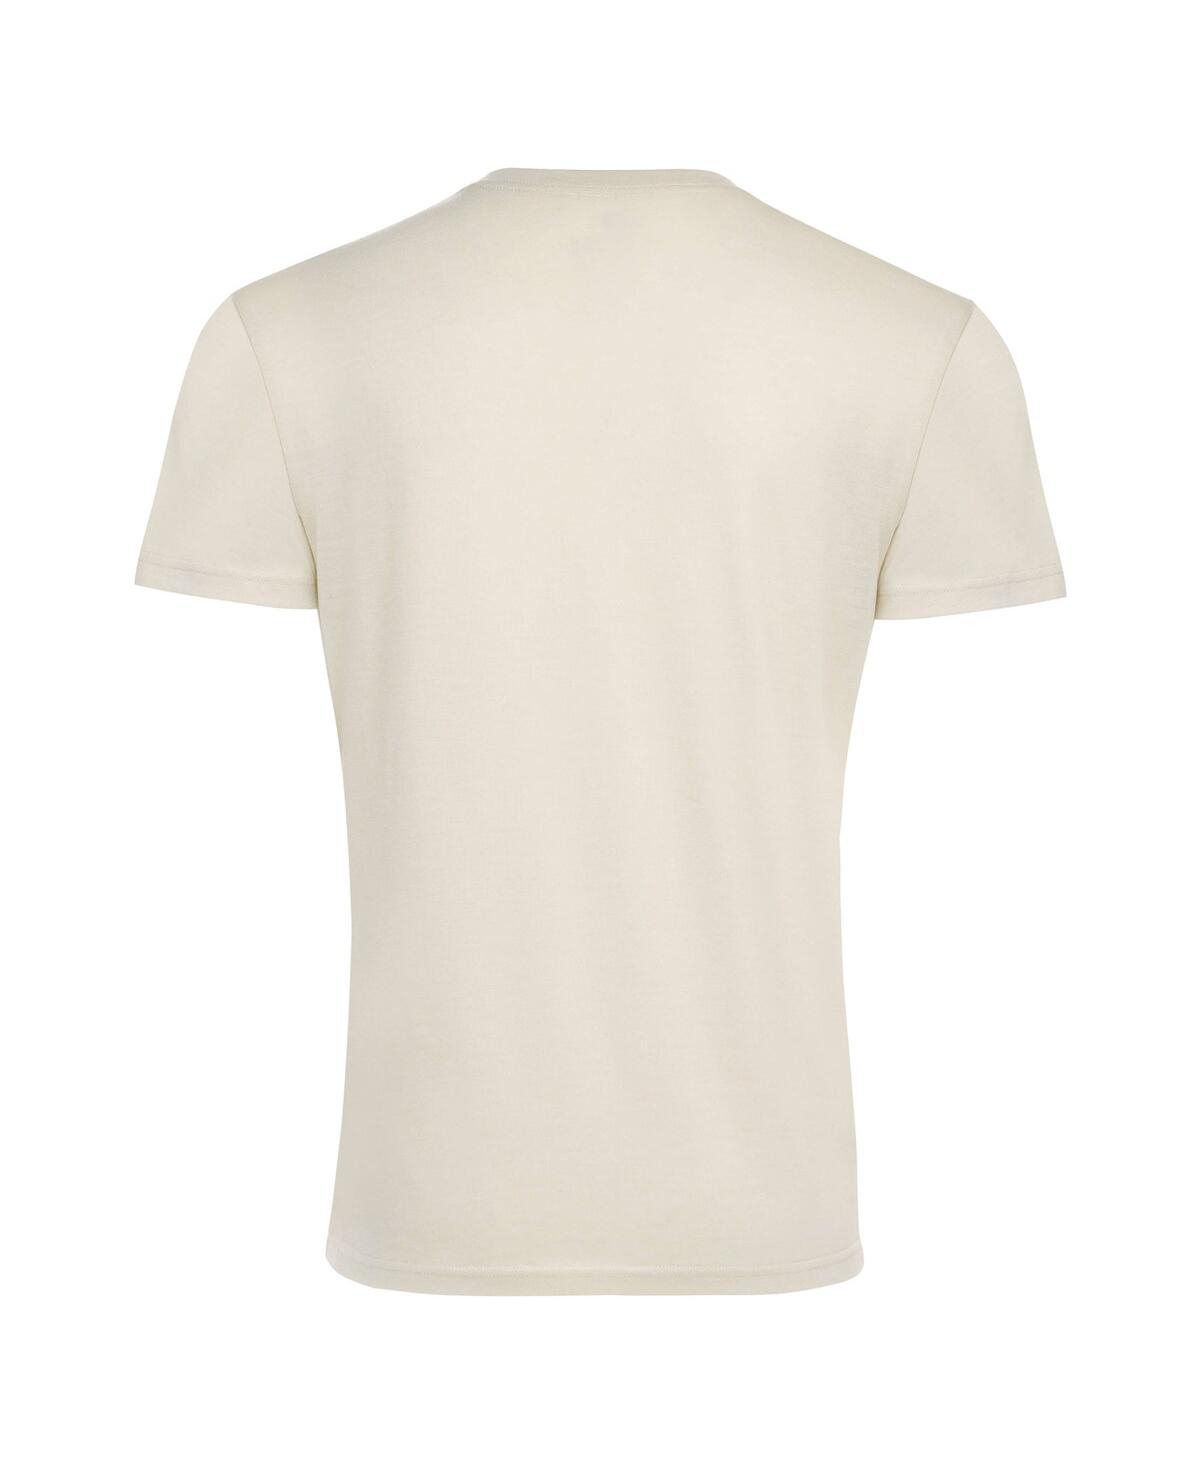 Shop Sportiqe Men's  White Golden State Warriors 2022 Nba Finals Comfy T-shirt